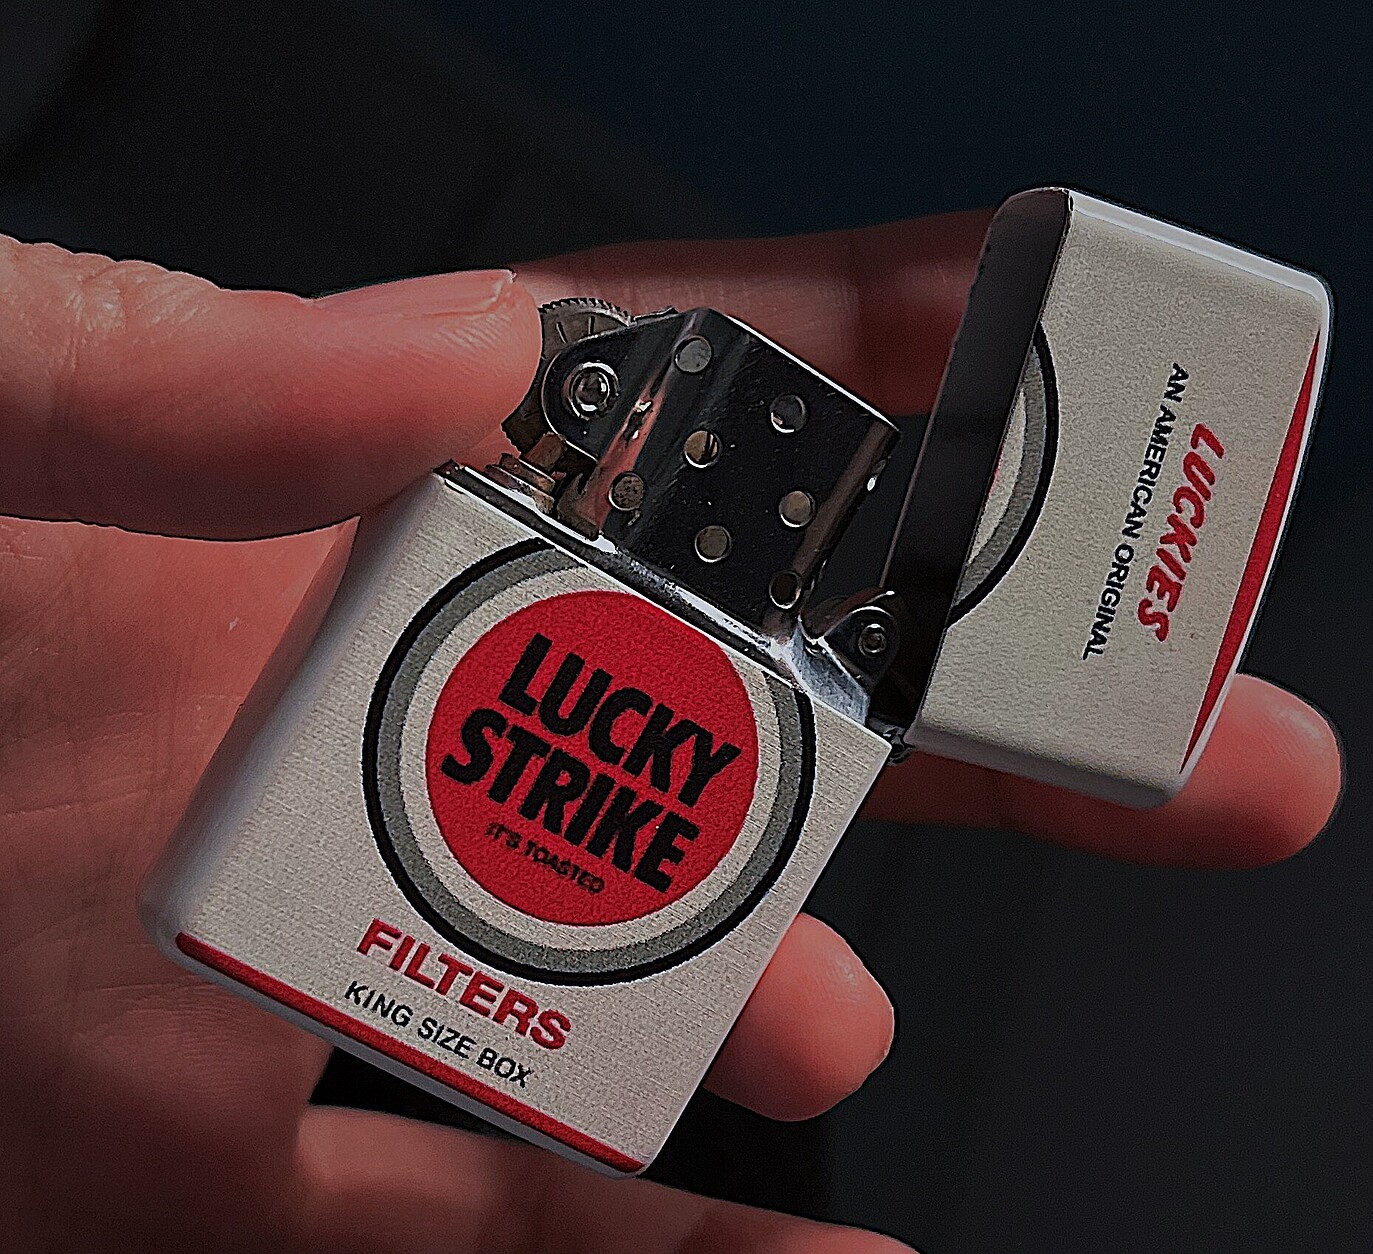 Lucky Strike branded zipper lighter with iconic logo design.